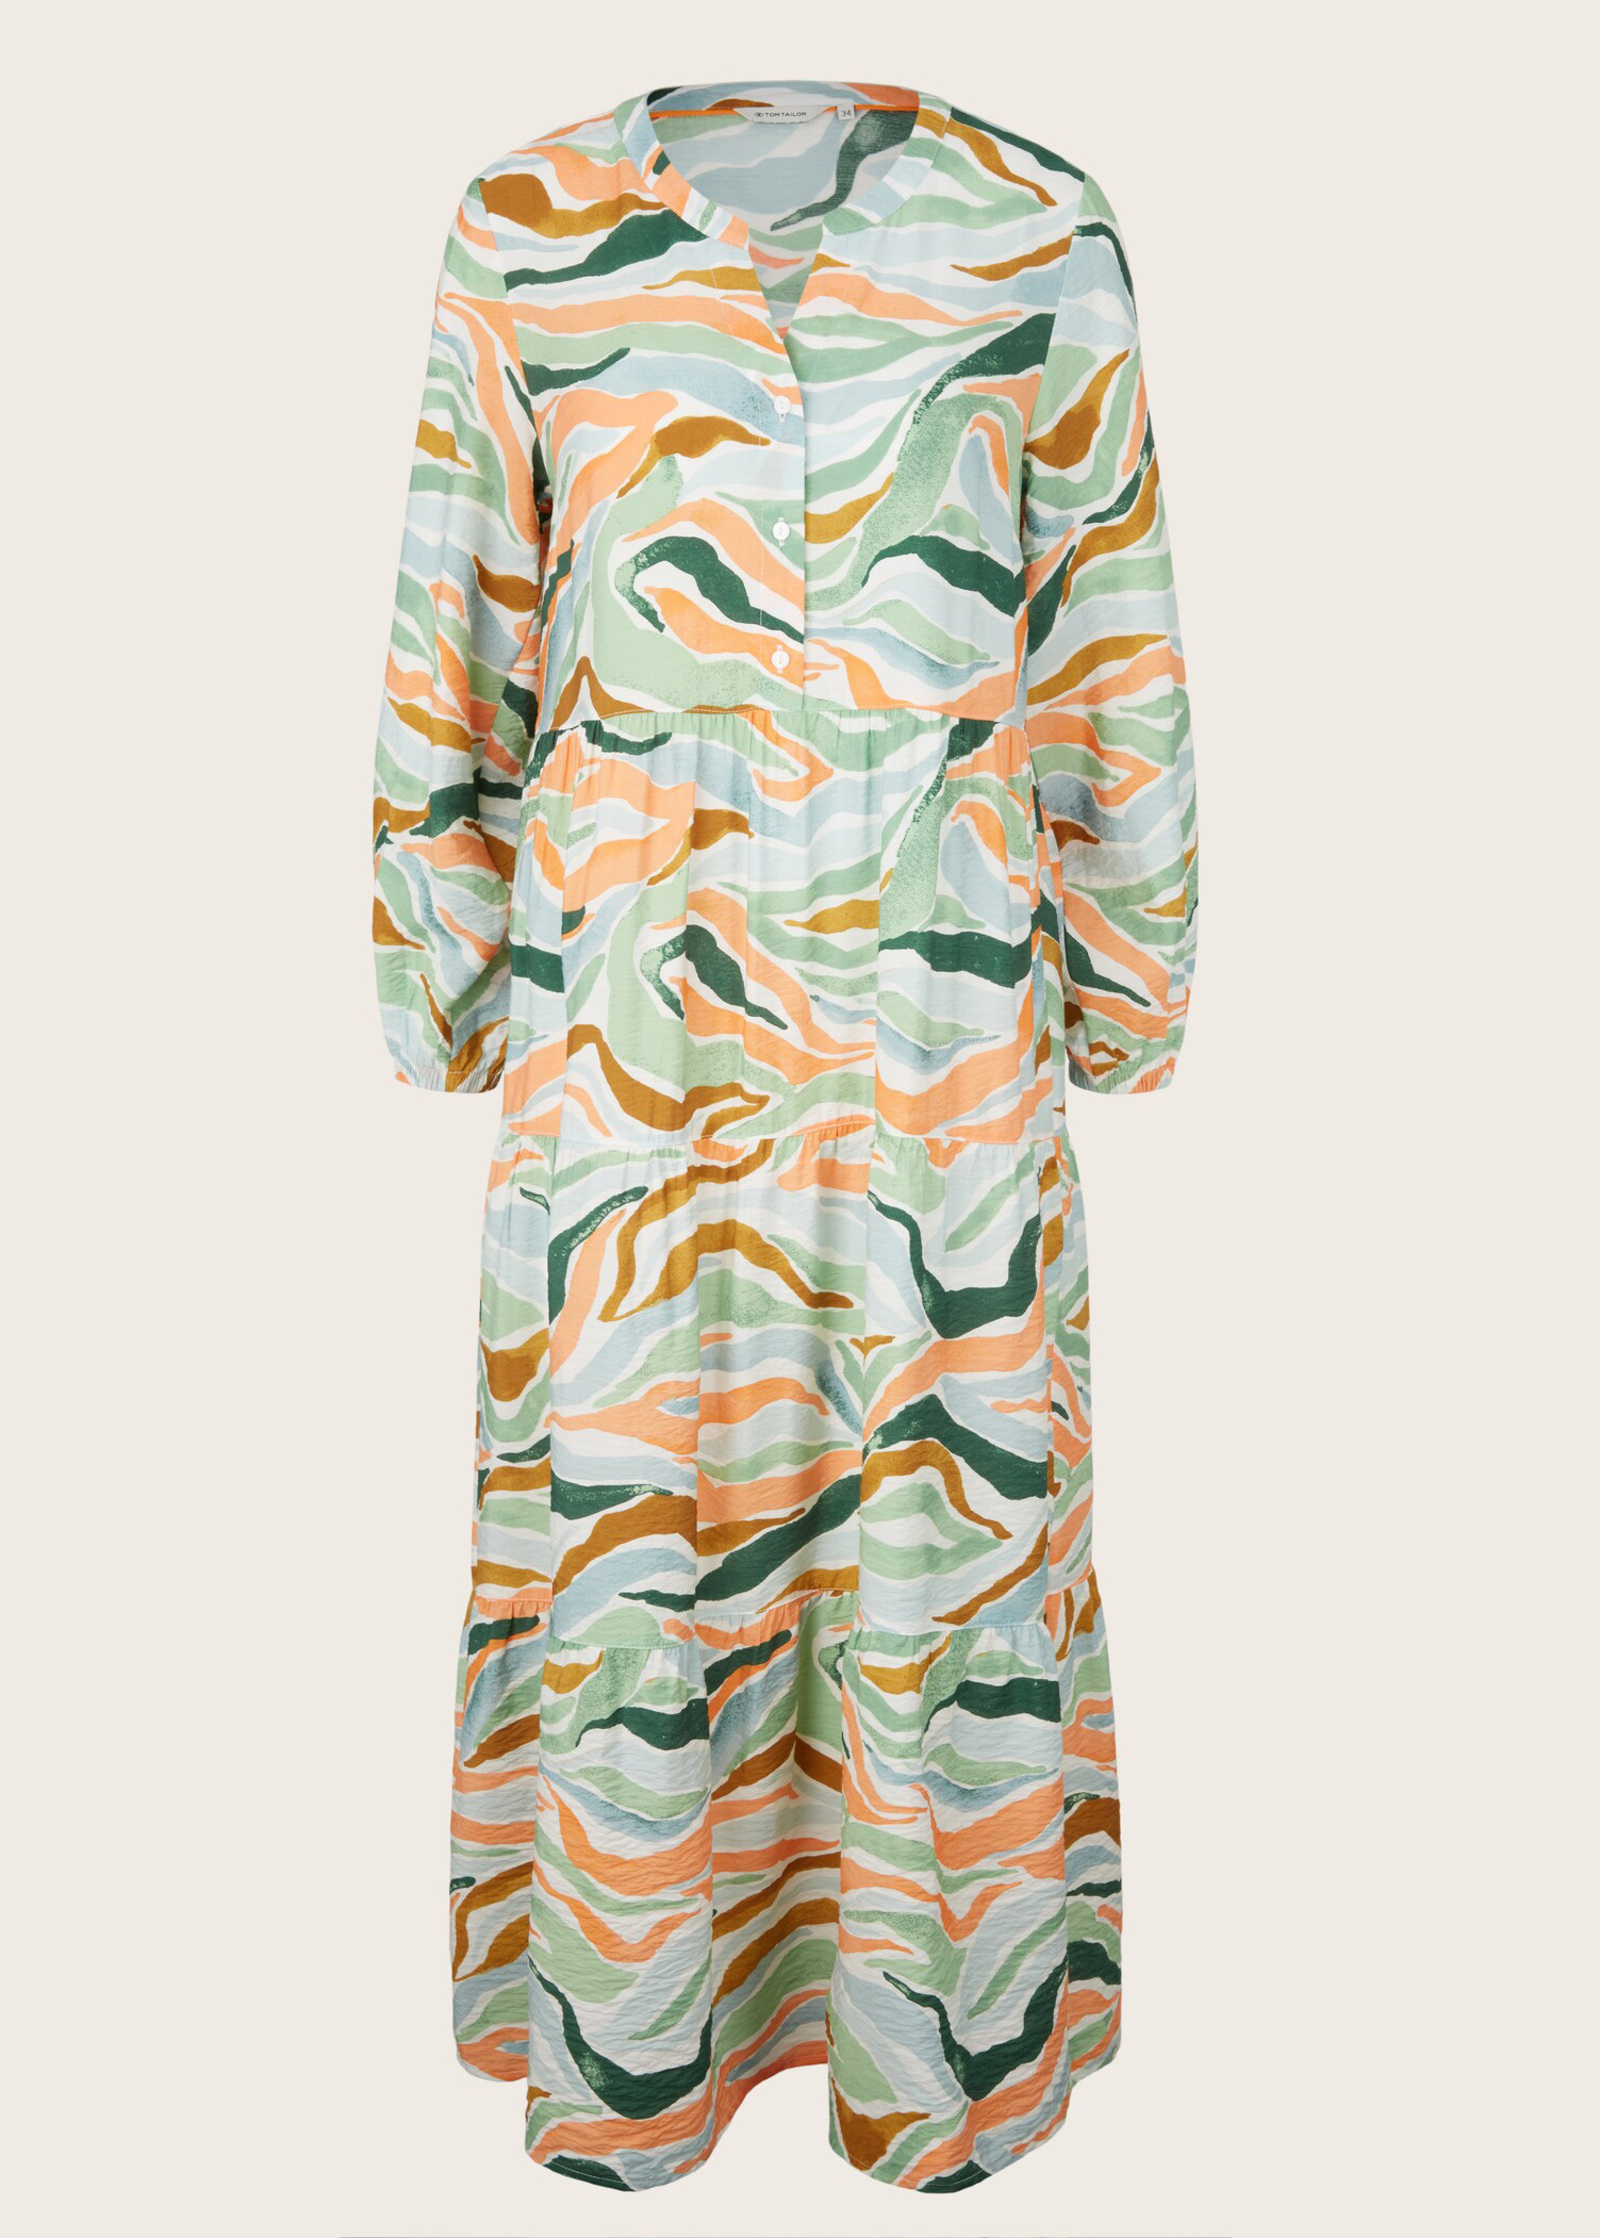 Colorful 38 Tailor® Tom Design Dress Size - Wavy